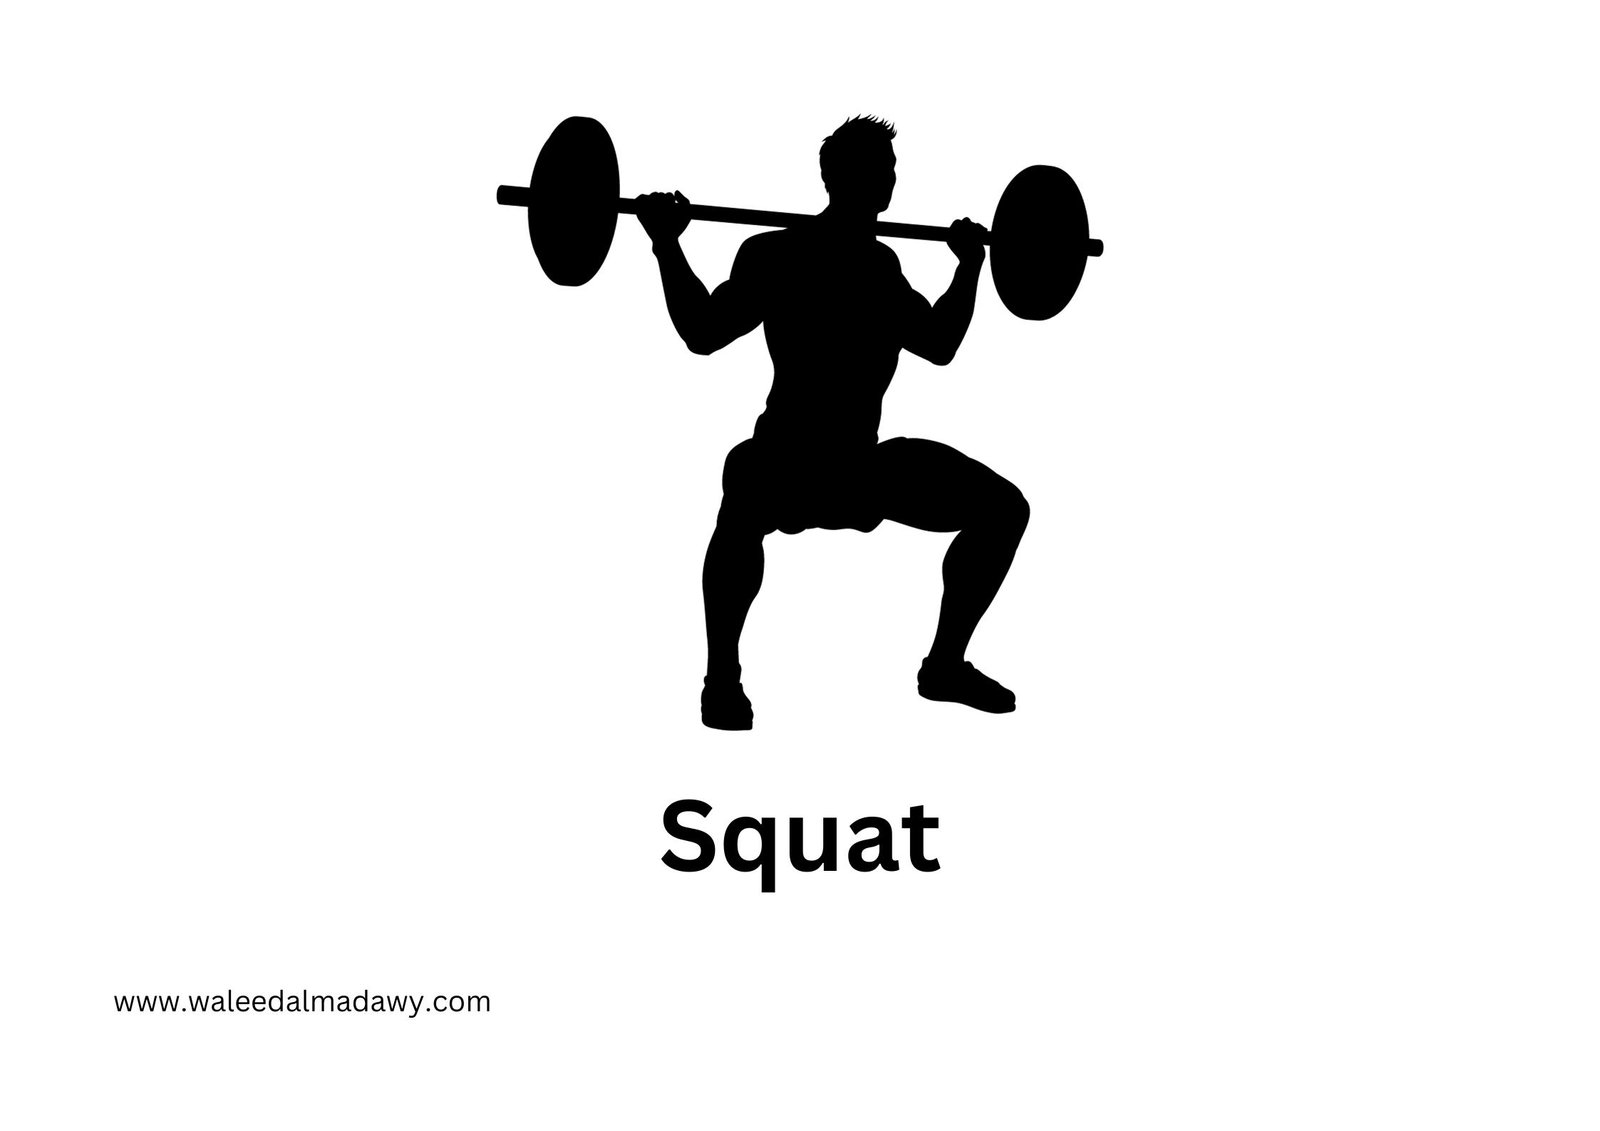 Squat - ممارسة الرياضة